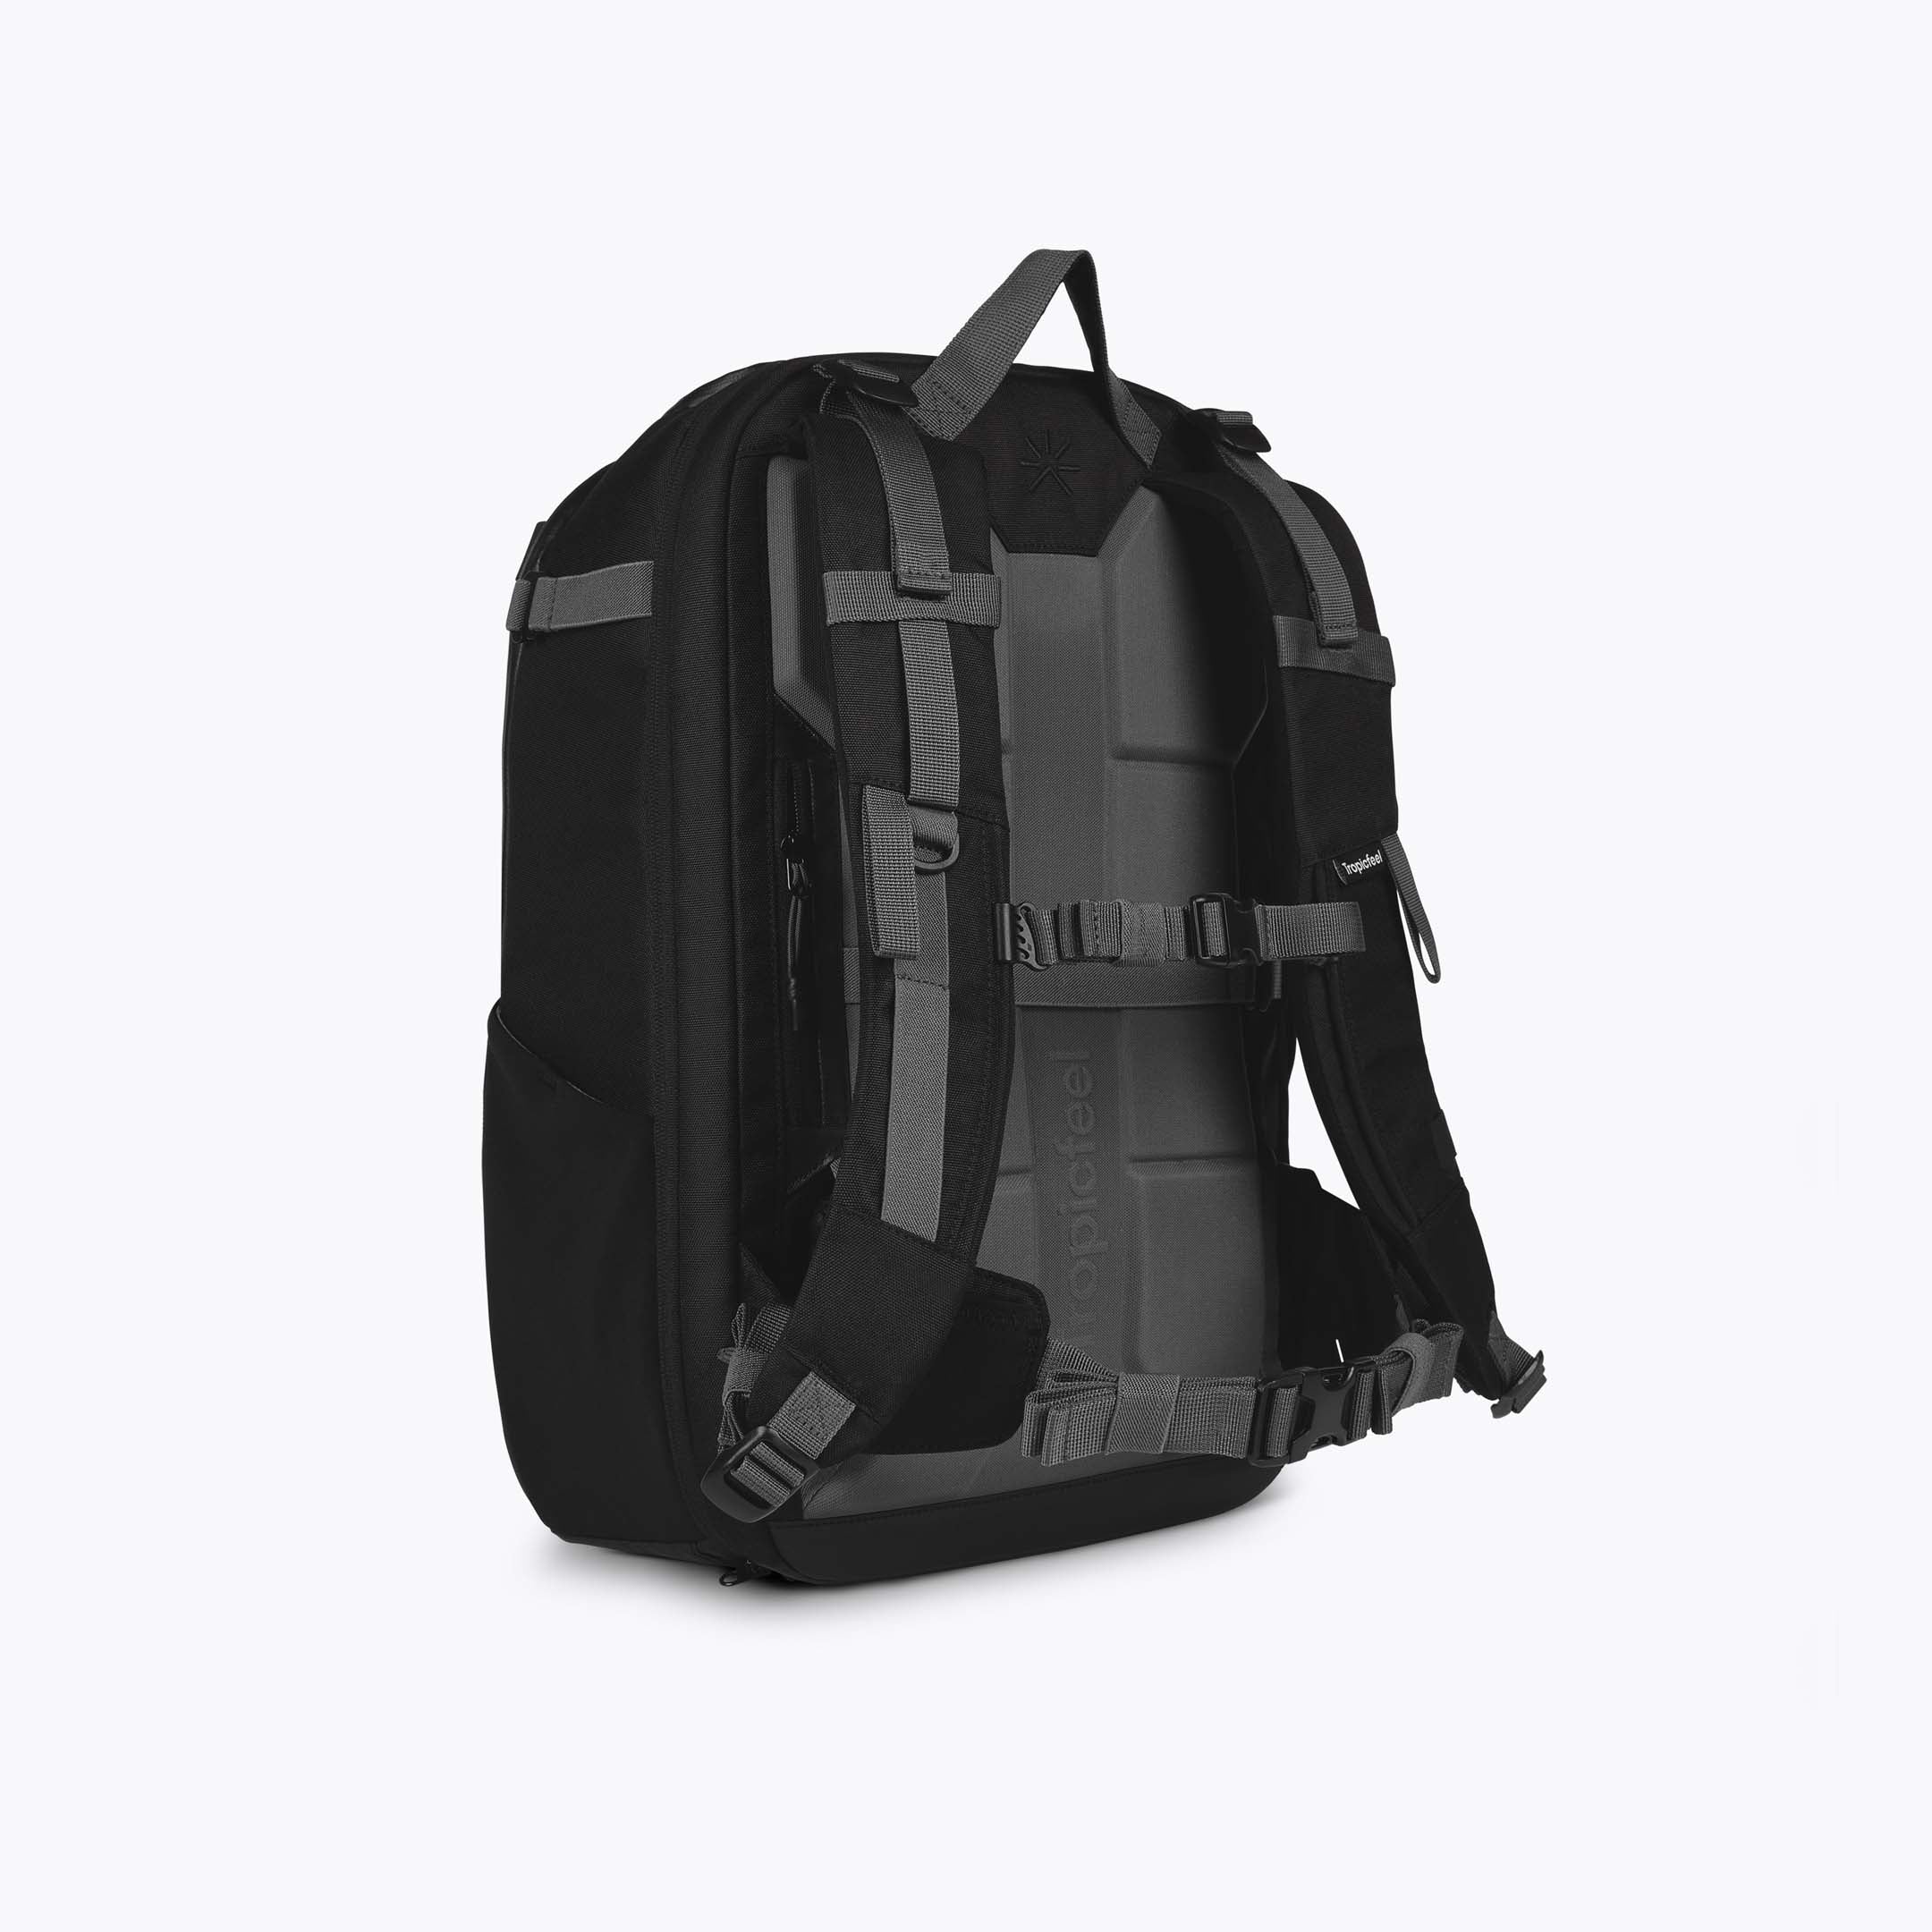 Hive Backpack Core Black | Tropicfeel